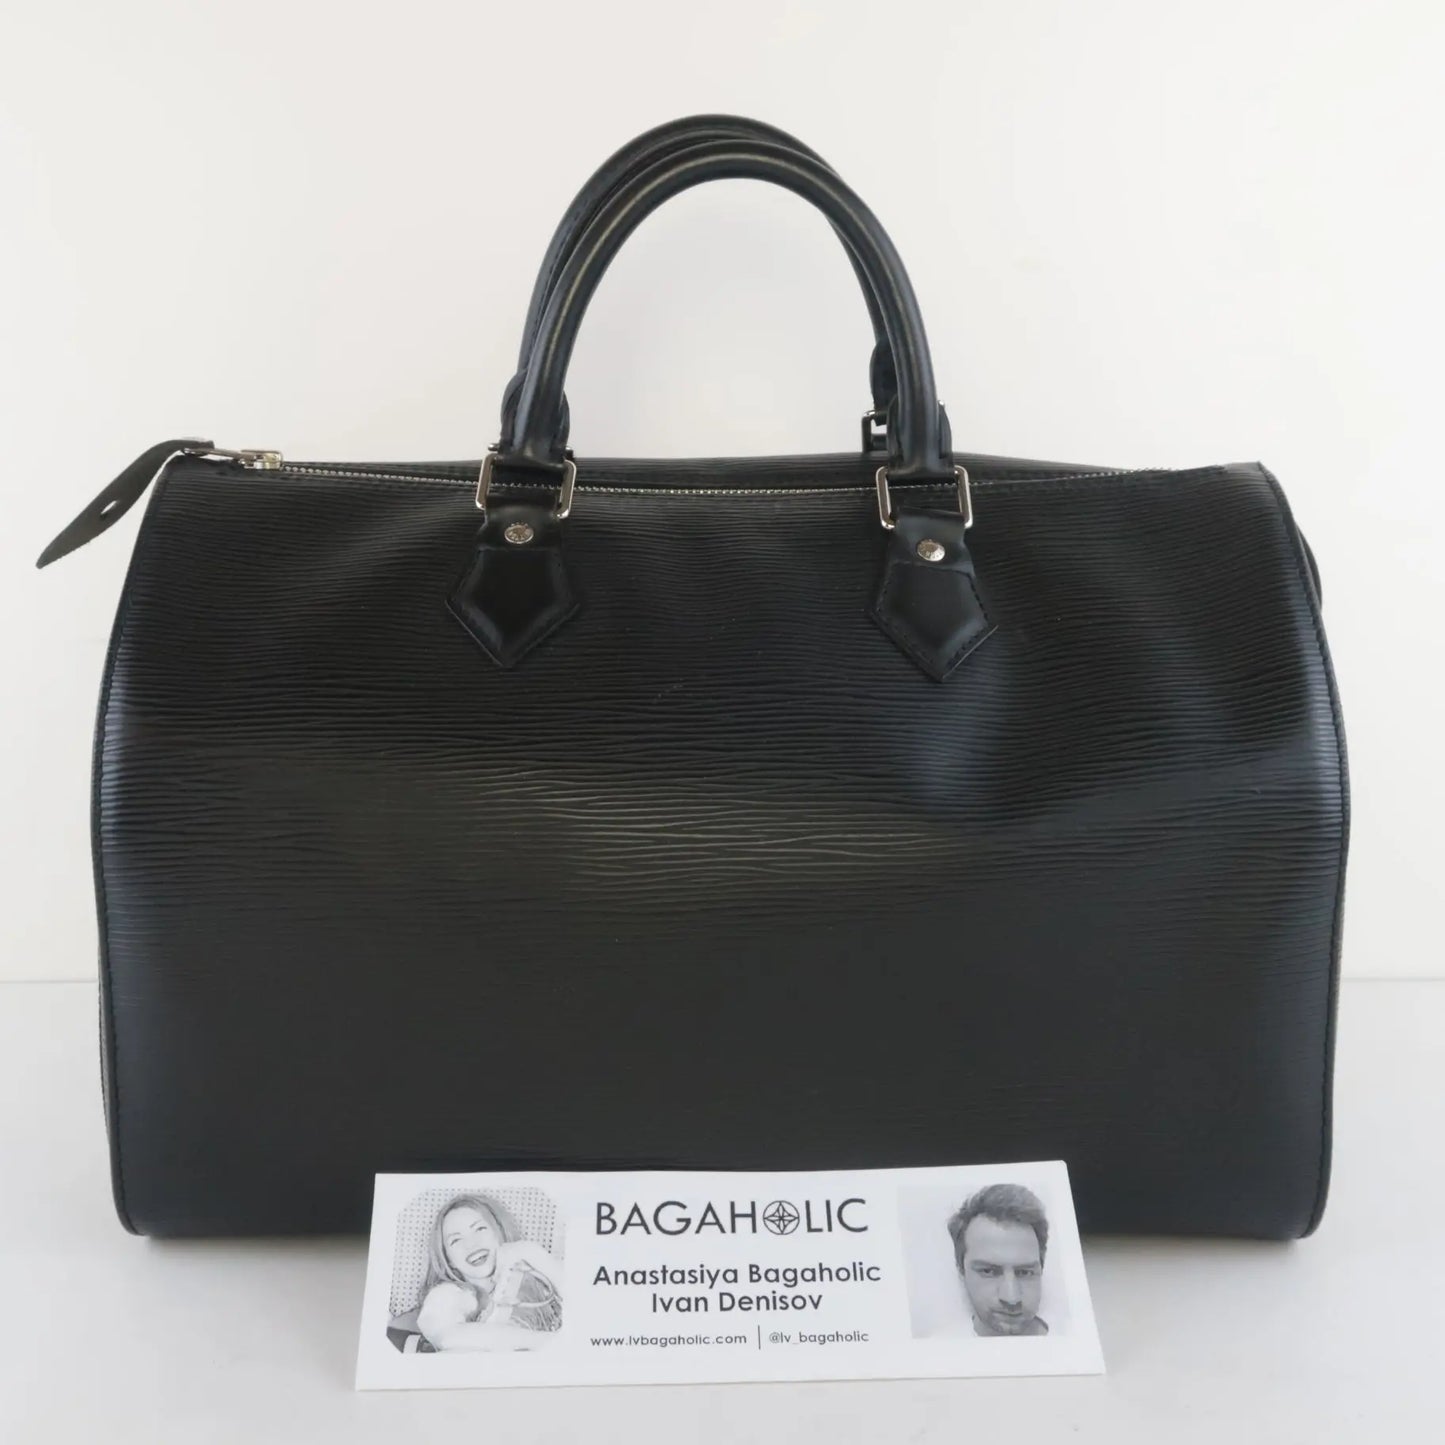 Louis Vuitton - speedy 30 epi in black Handbag in Germany